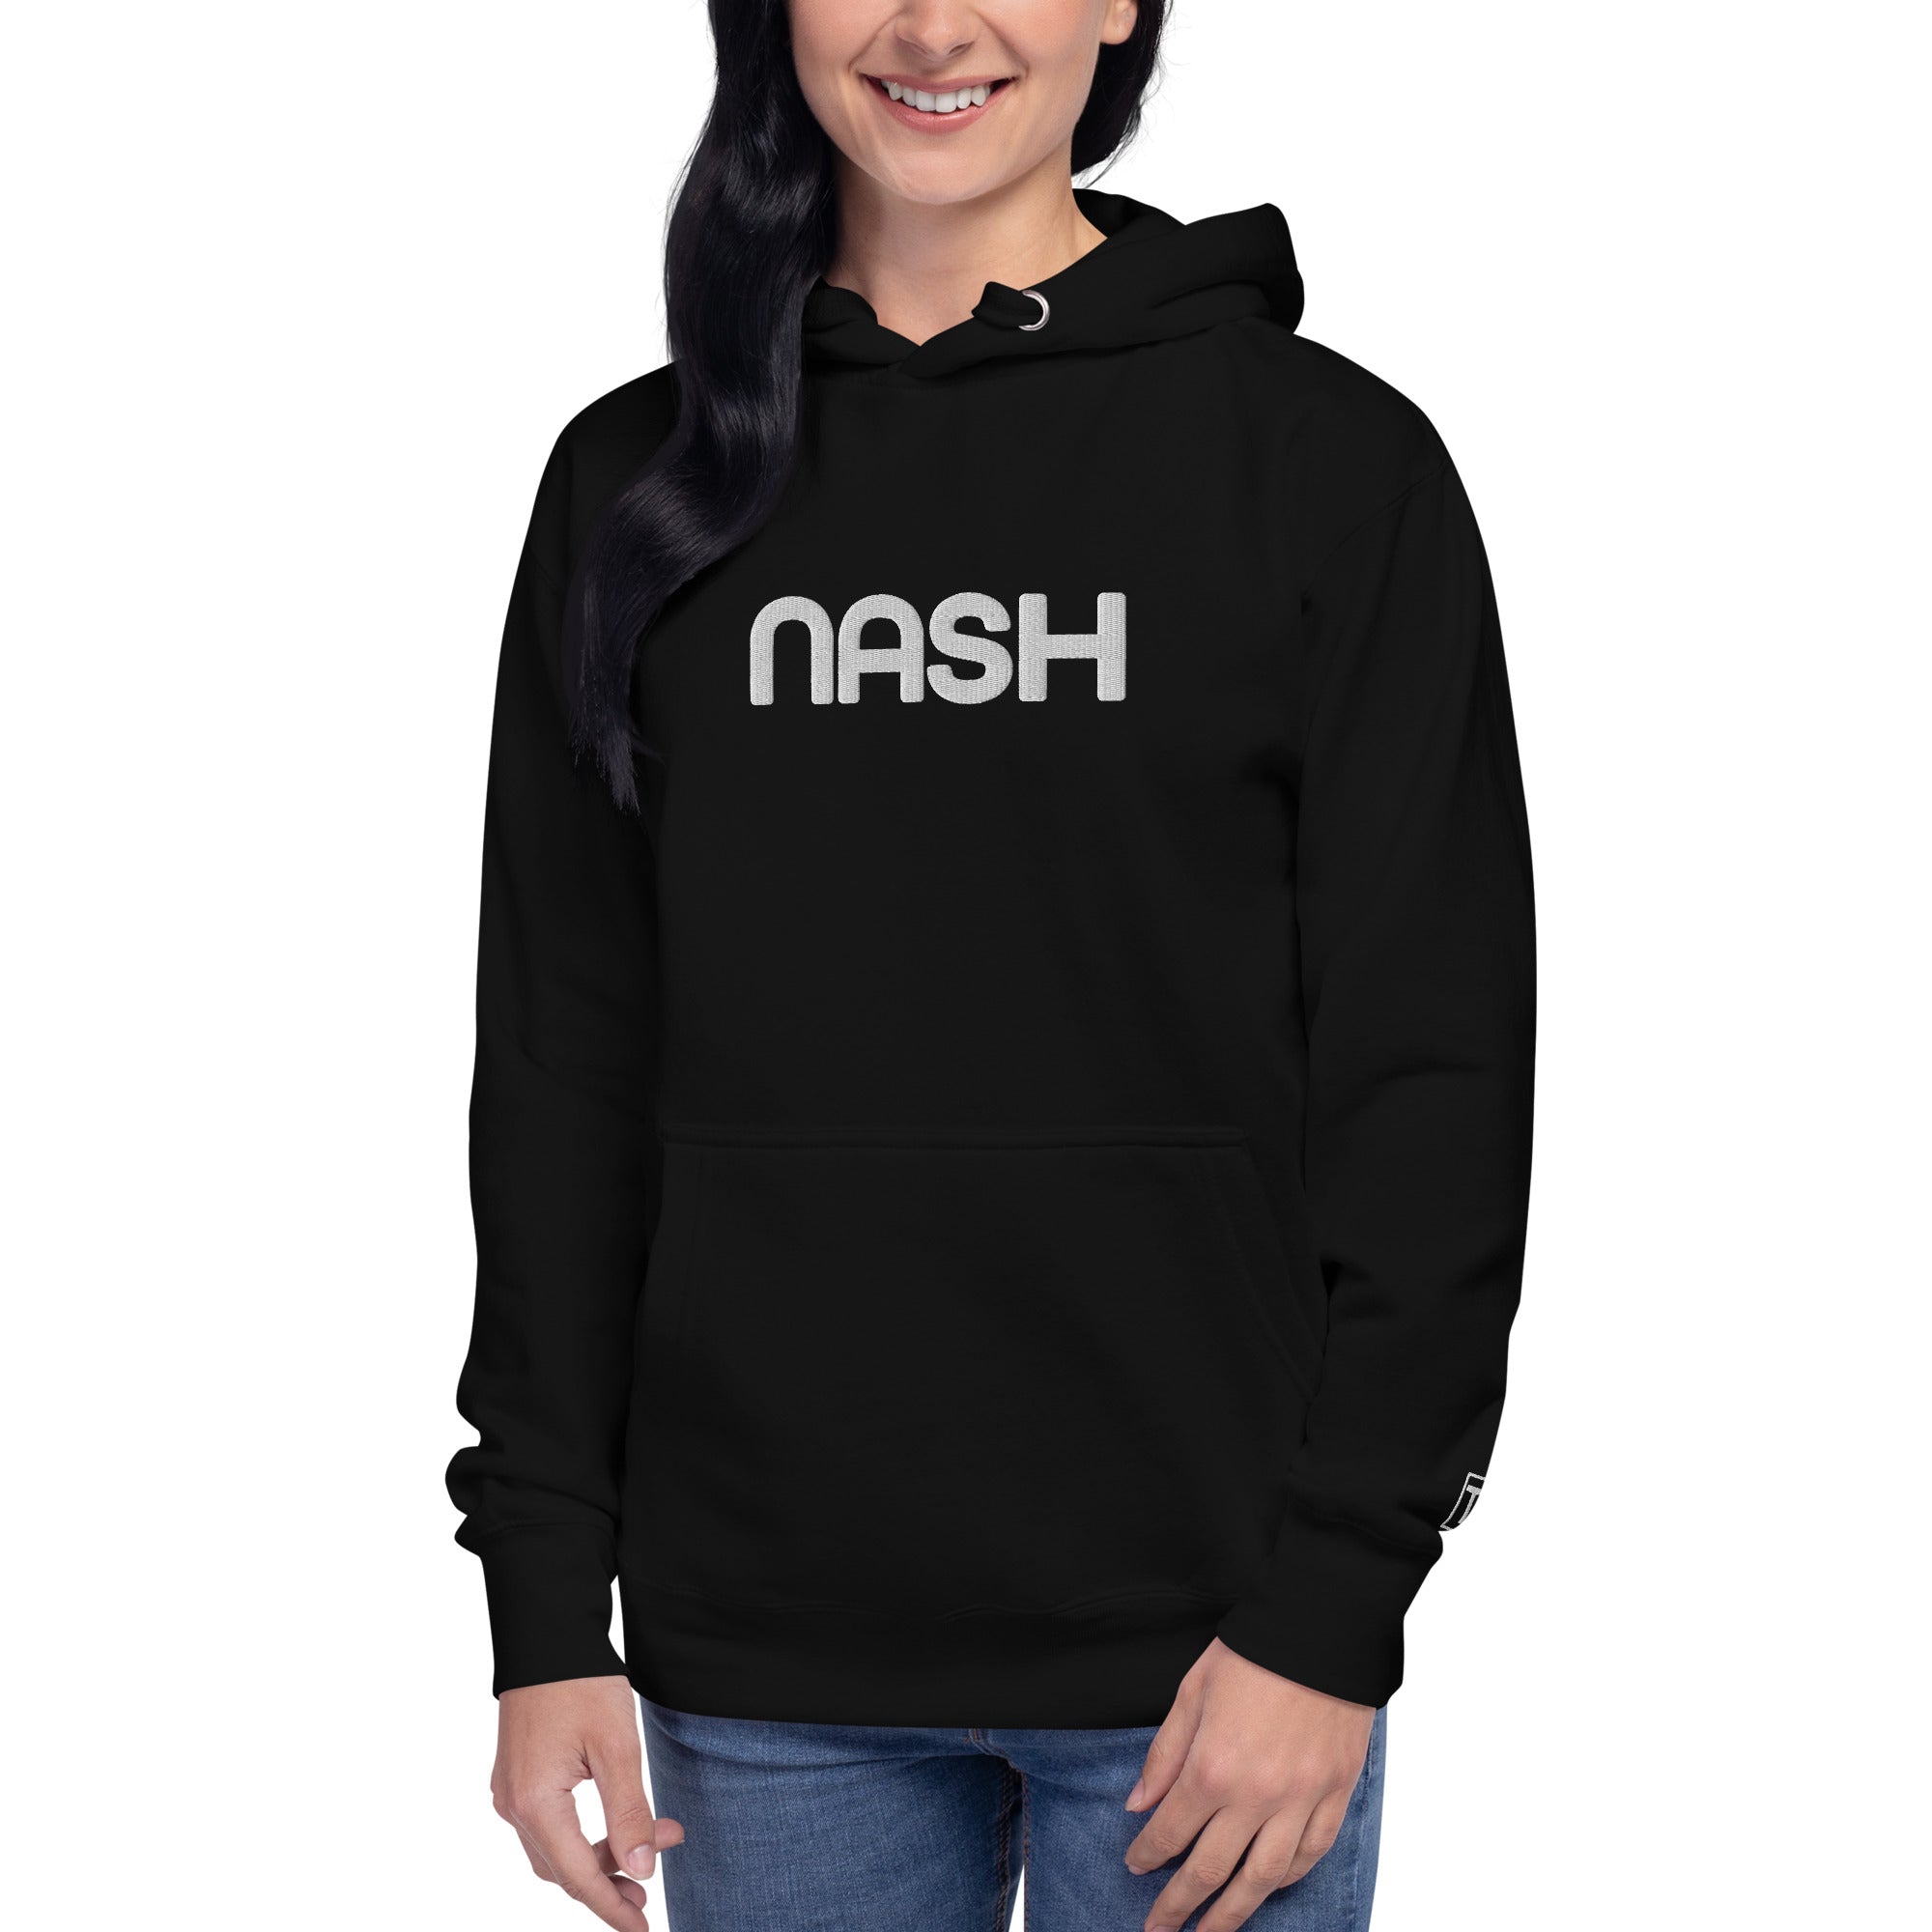 Nash Embroidered Unisex Hoodie, Center Upper, TN Left Sleeve, Nash Hoodie, Nash Apparel